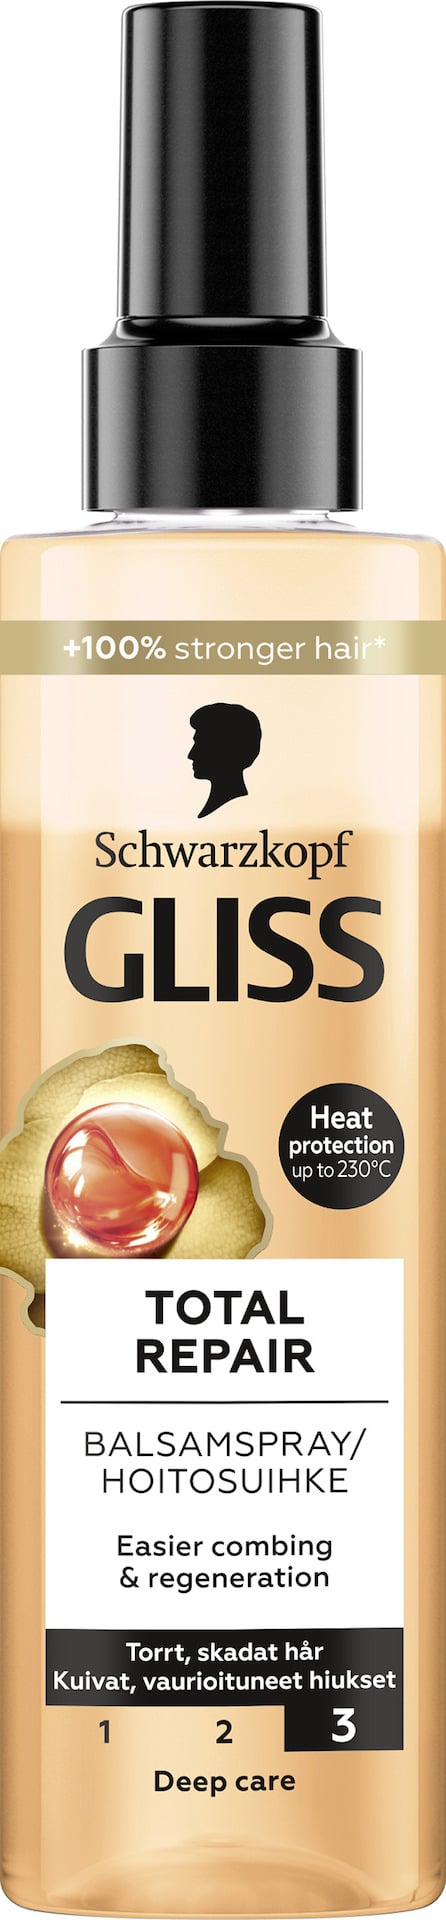 Schwarzkopf Gliss Total Repair Balsamspray 200 ml